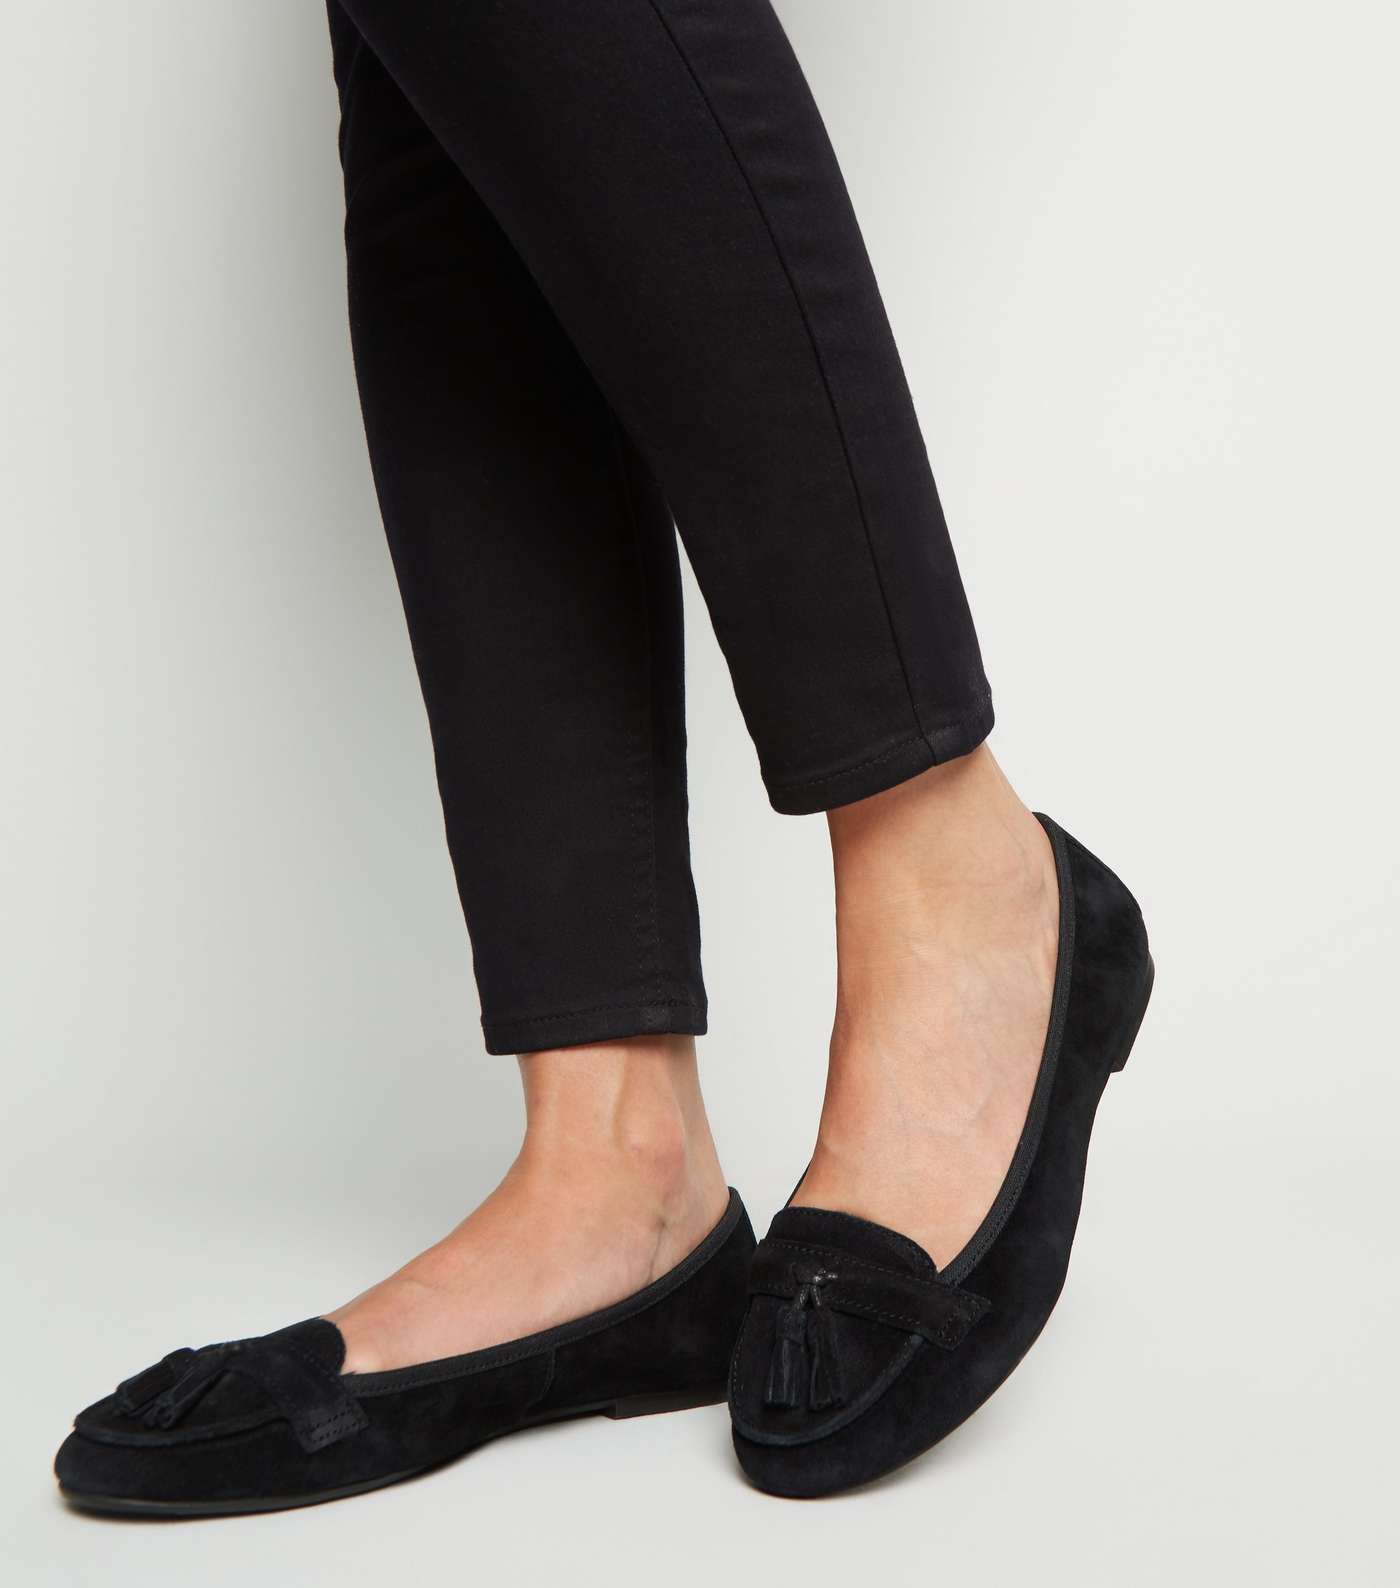 Wide Fit Black Suede Tassel Loafers Image 2